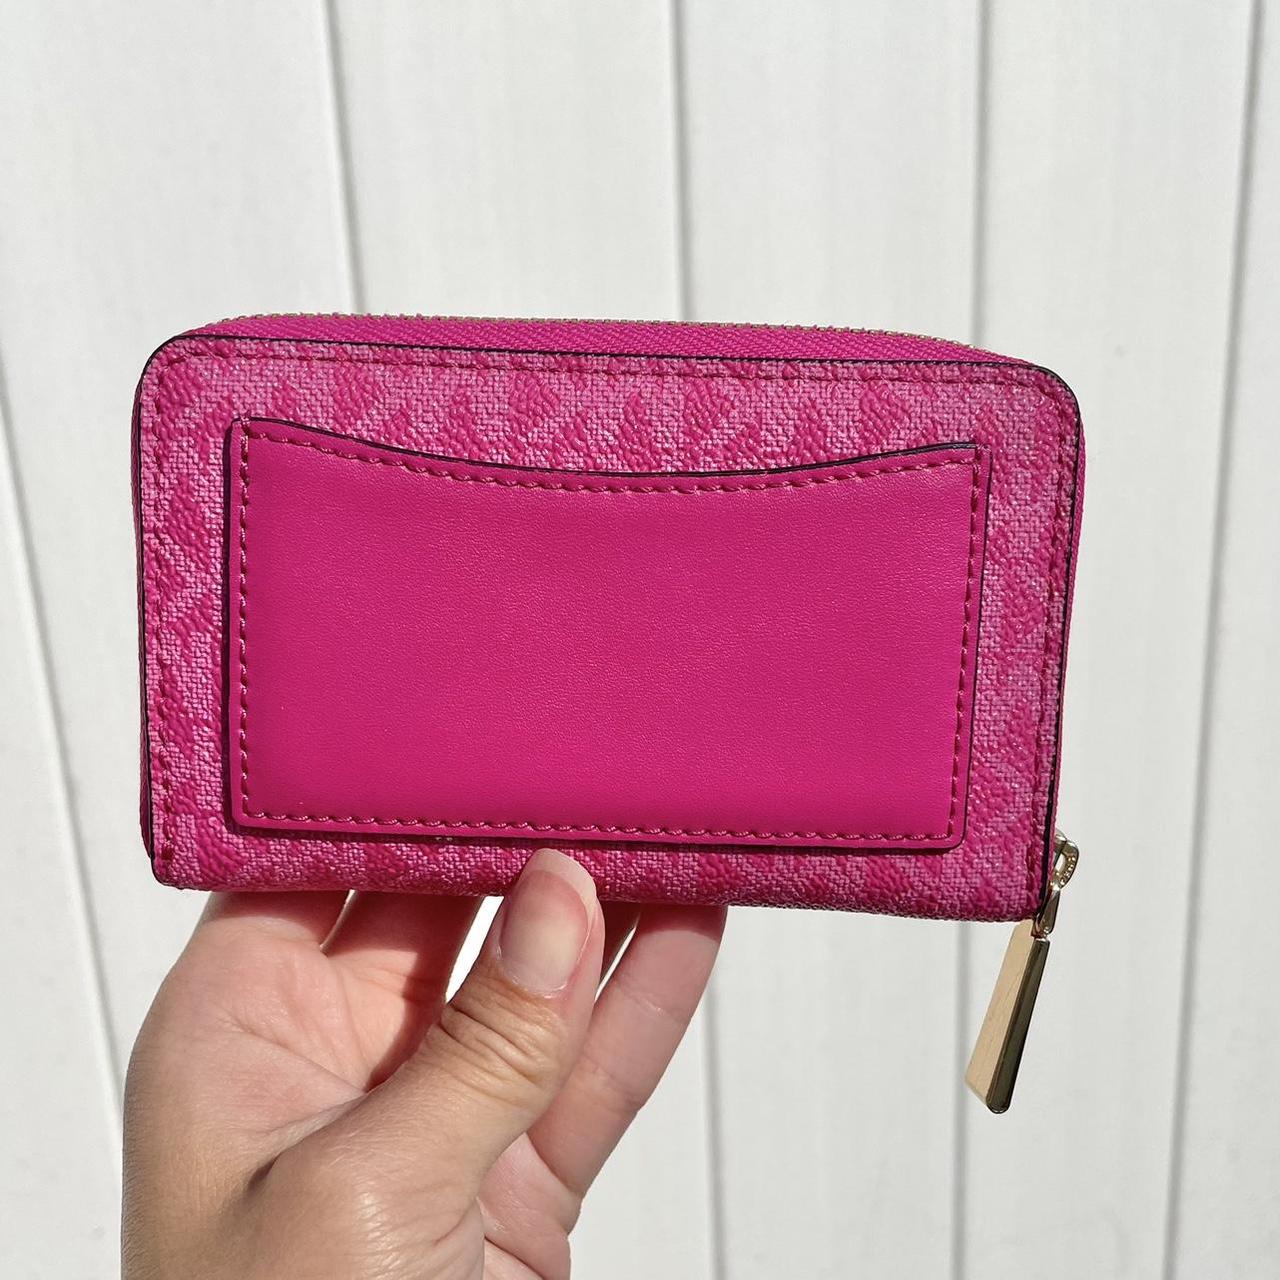 MICHAEL KORS Women Pink Genuine Leather Wallet Soft - Price in India |  Flipkart.com